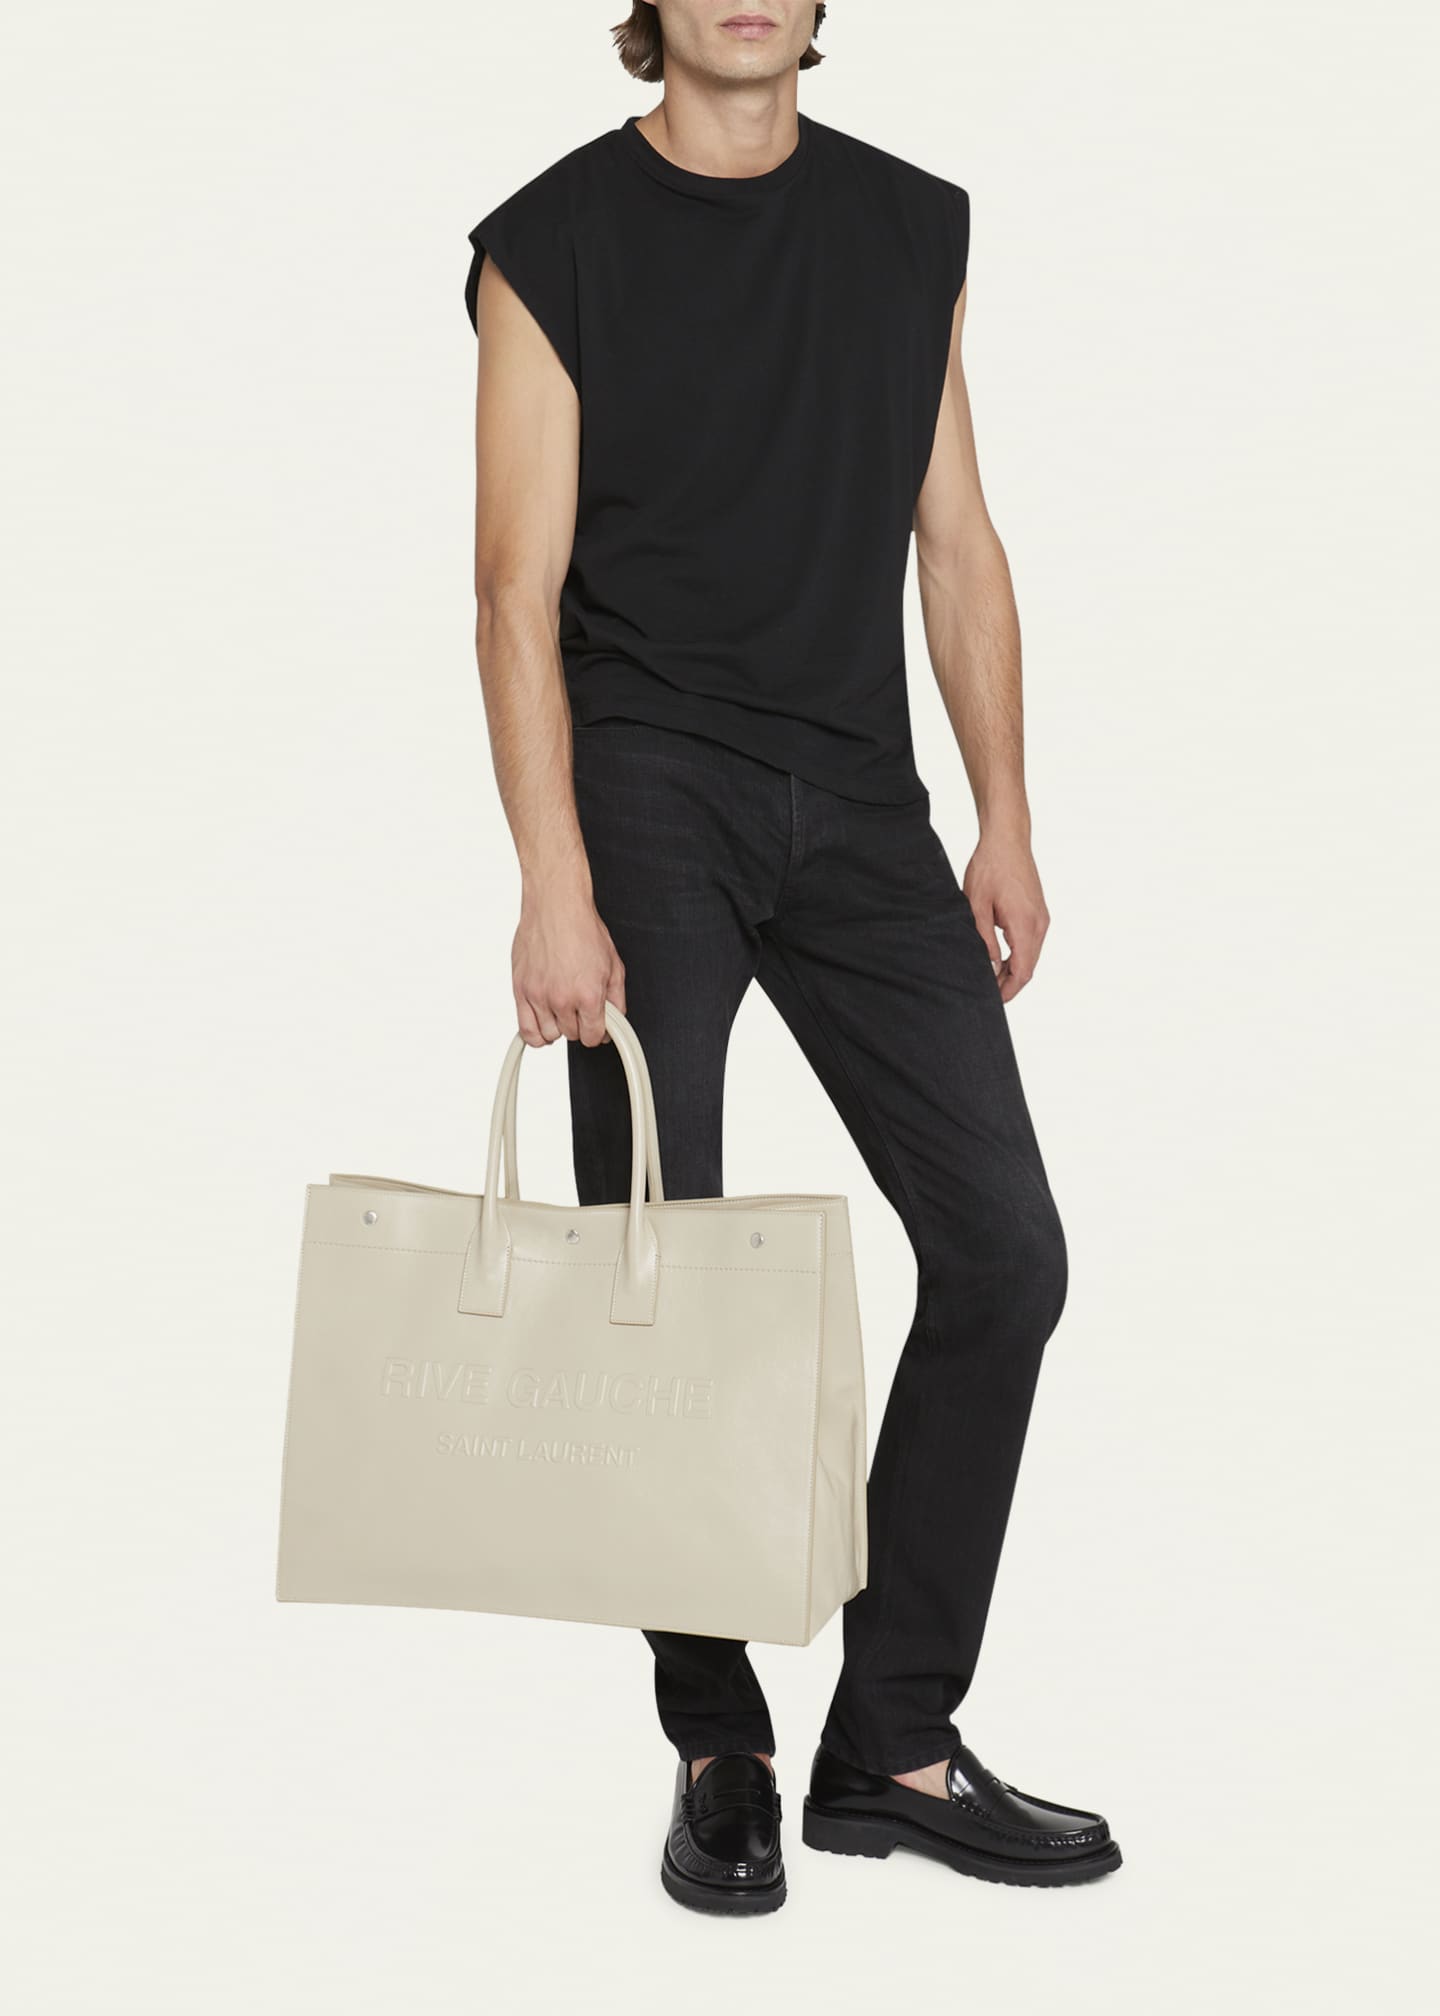 Men's 'rive Gauche' Bucket Bag by Saint Laurent